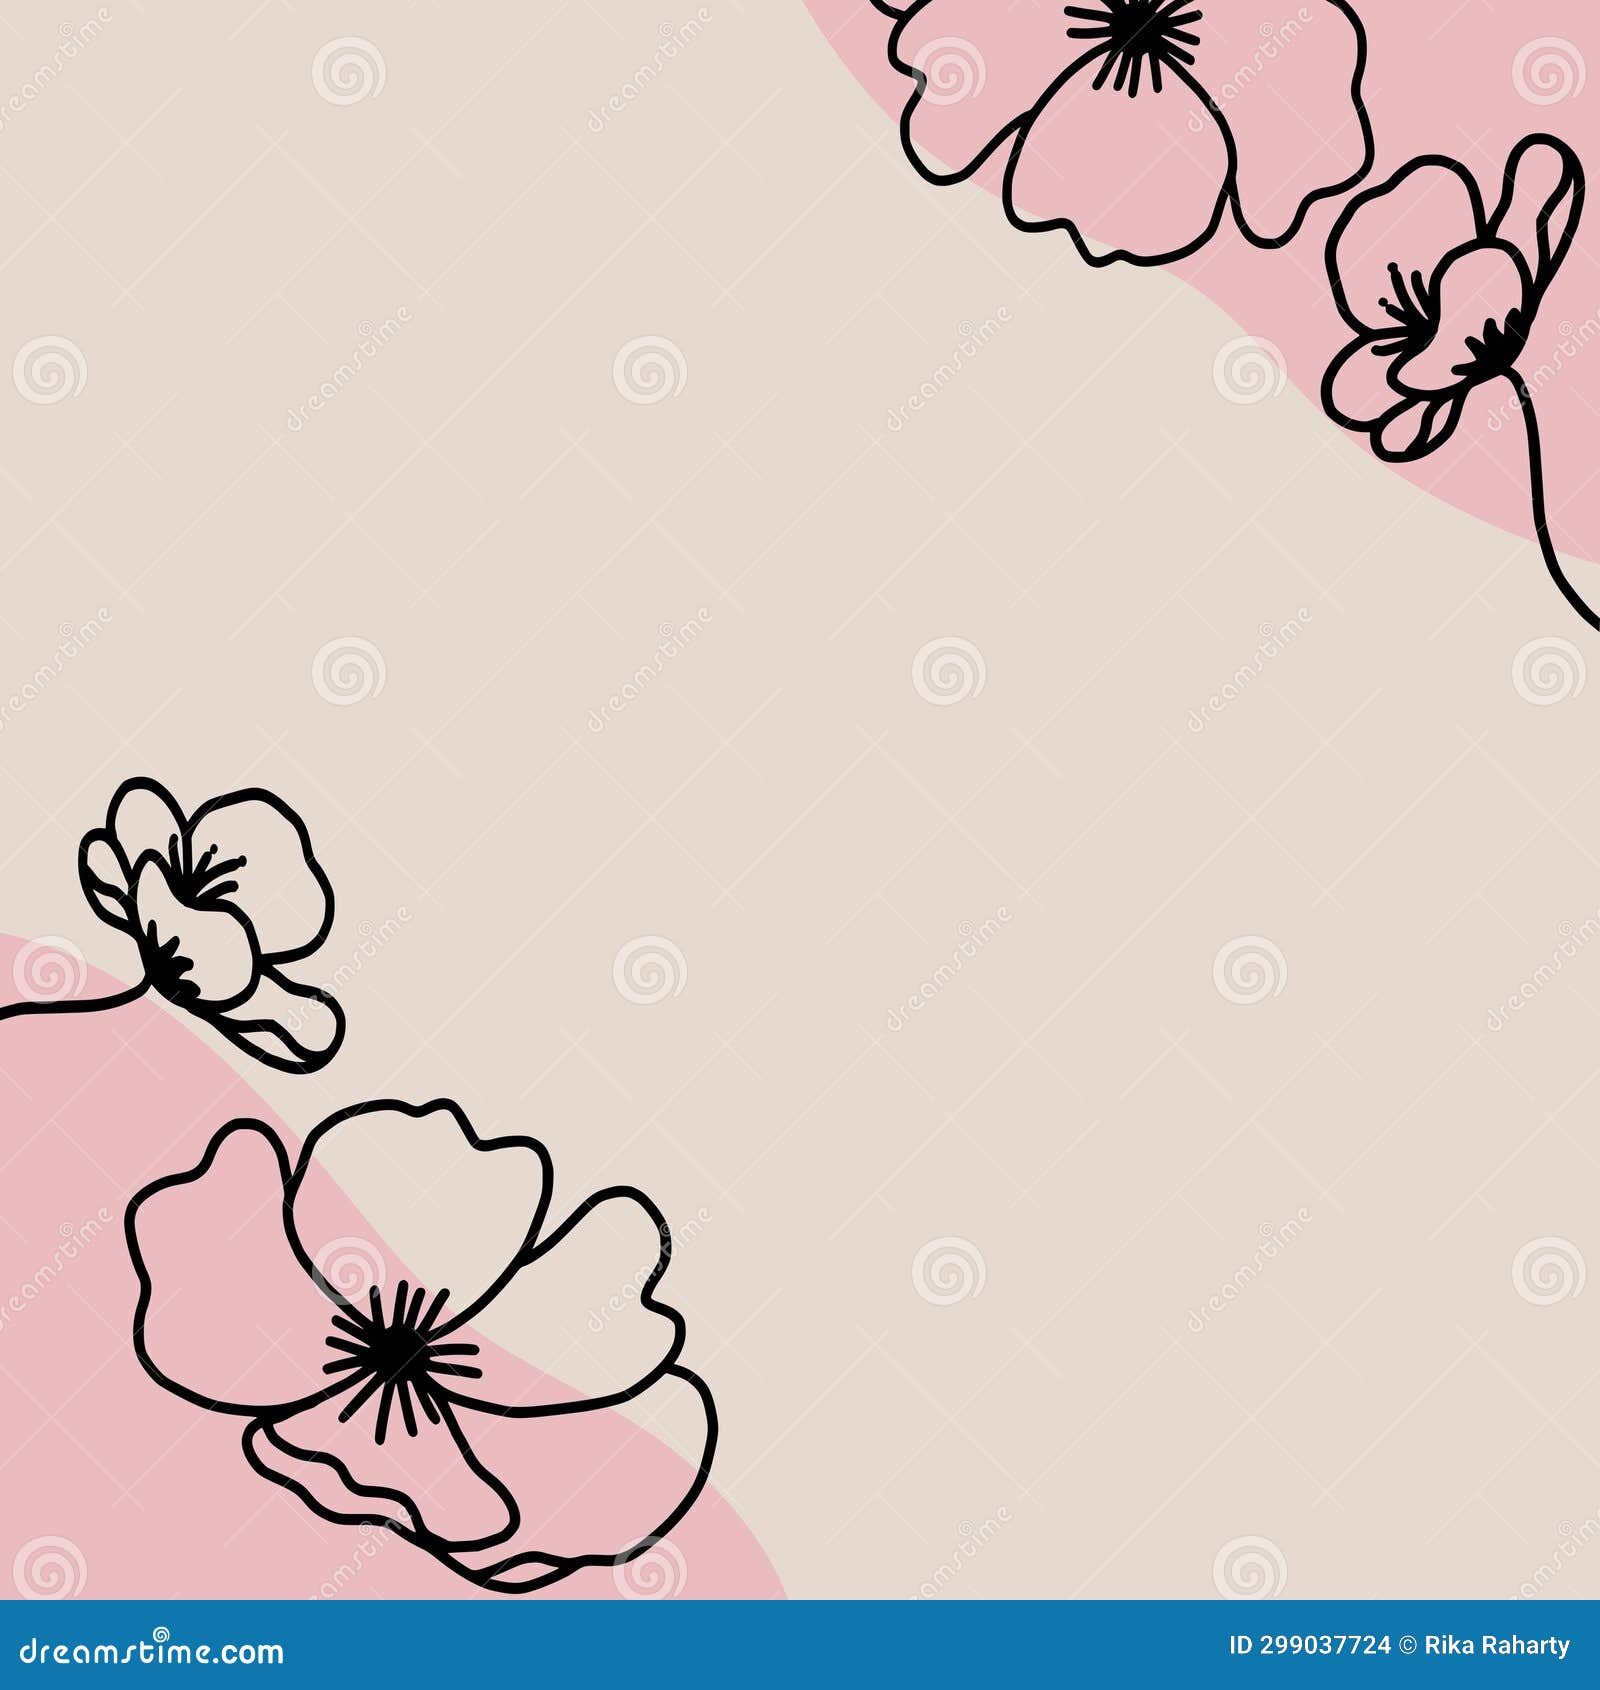 Cosmos Wild Flowers Line Art Background Vector. Stock Illustration ...